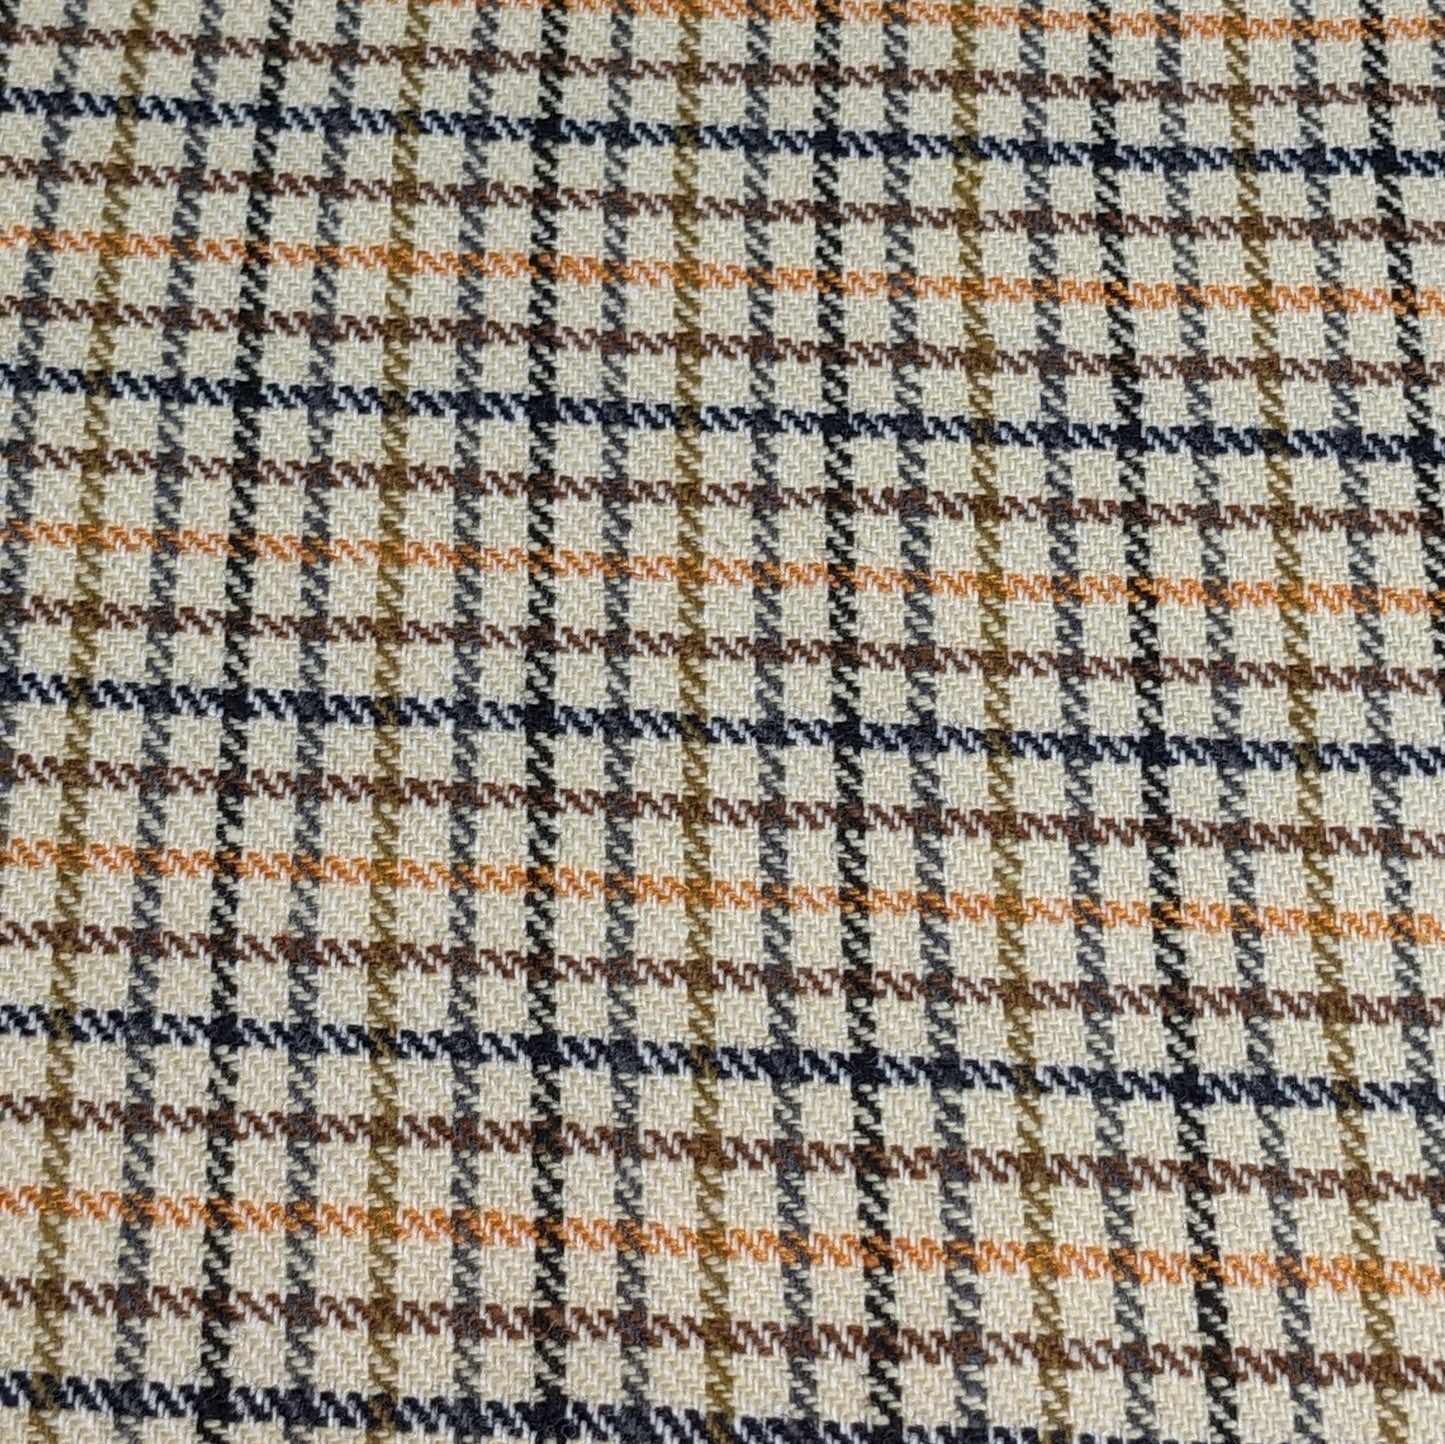 Wool Blend Highland Tweed Dogtooth Fabric - Cream, Orange and Brown